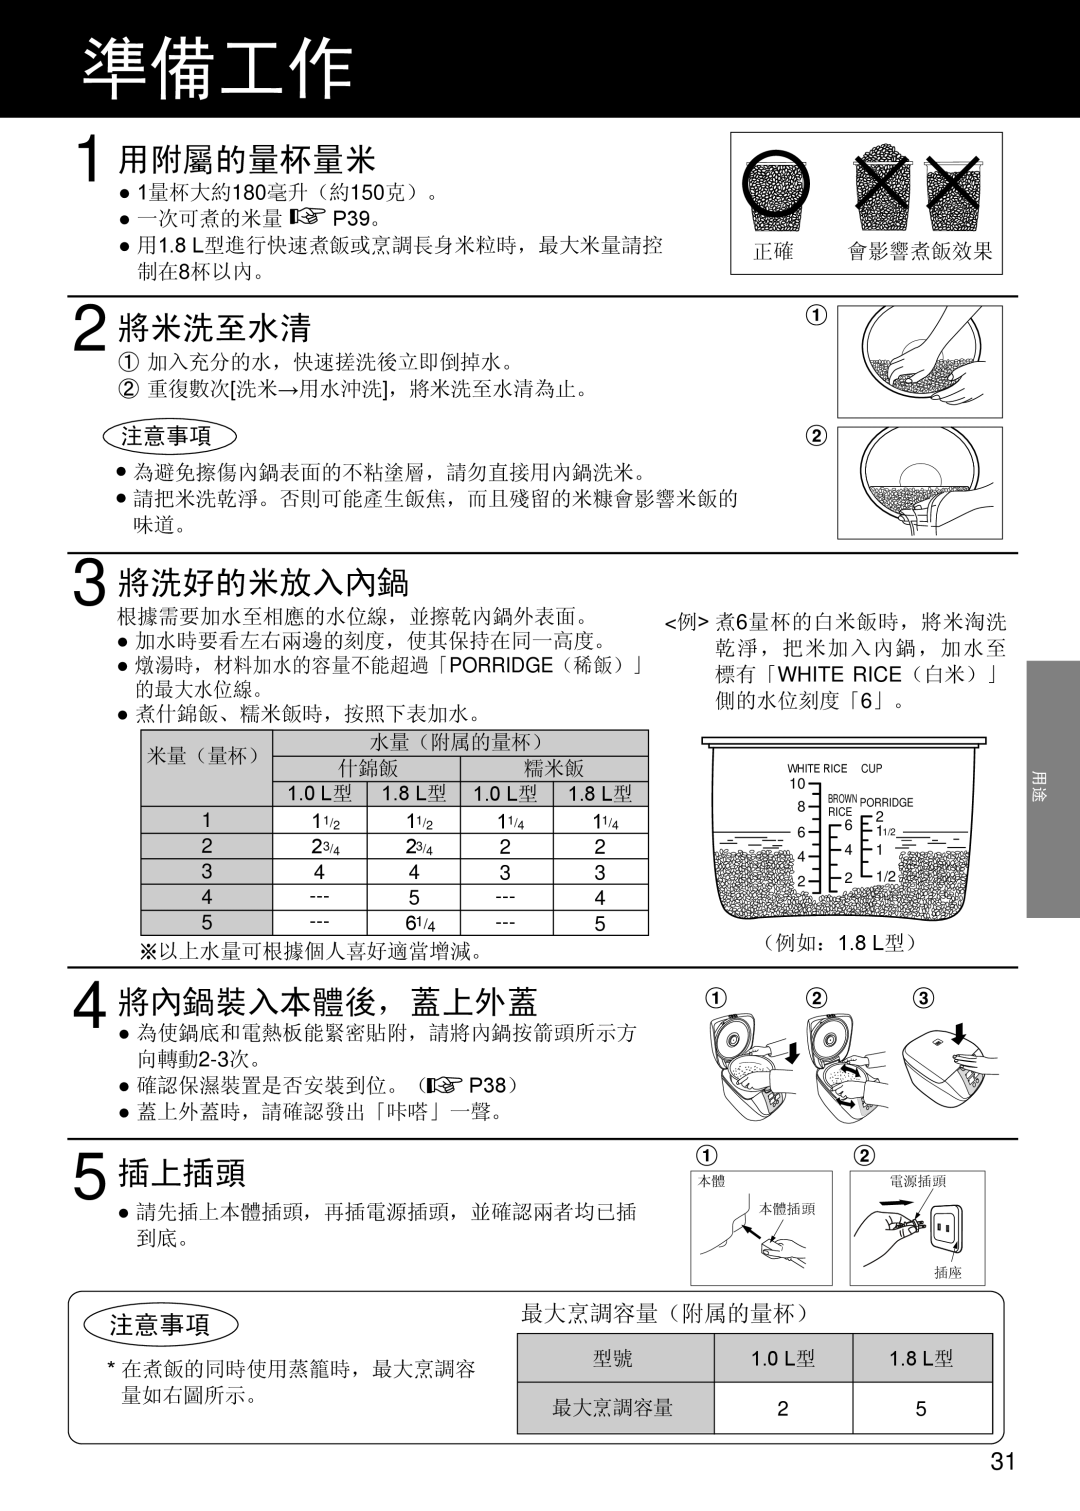 Panasonic SR/DF181 specifications 準備工作, 1 用附屬的量杯量米, 2 將米洗至水清, 將洗好的米放入內鍋, 插上插頭, 注意事項 